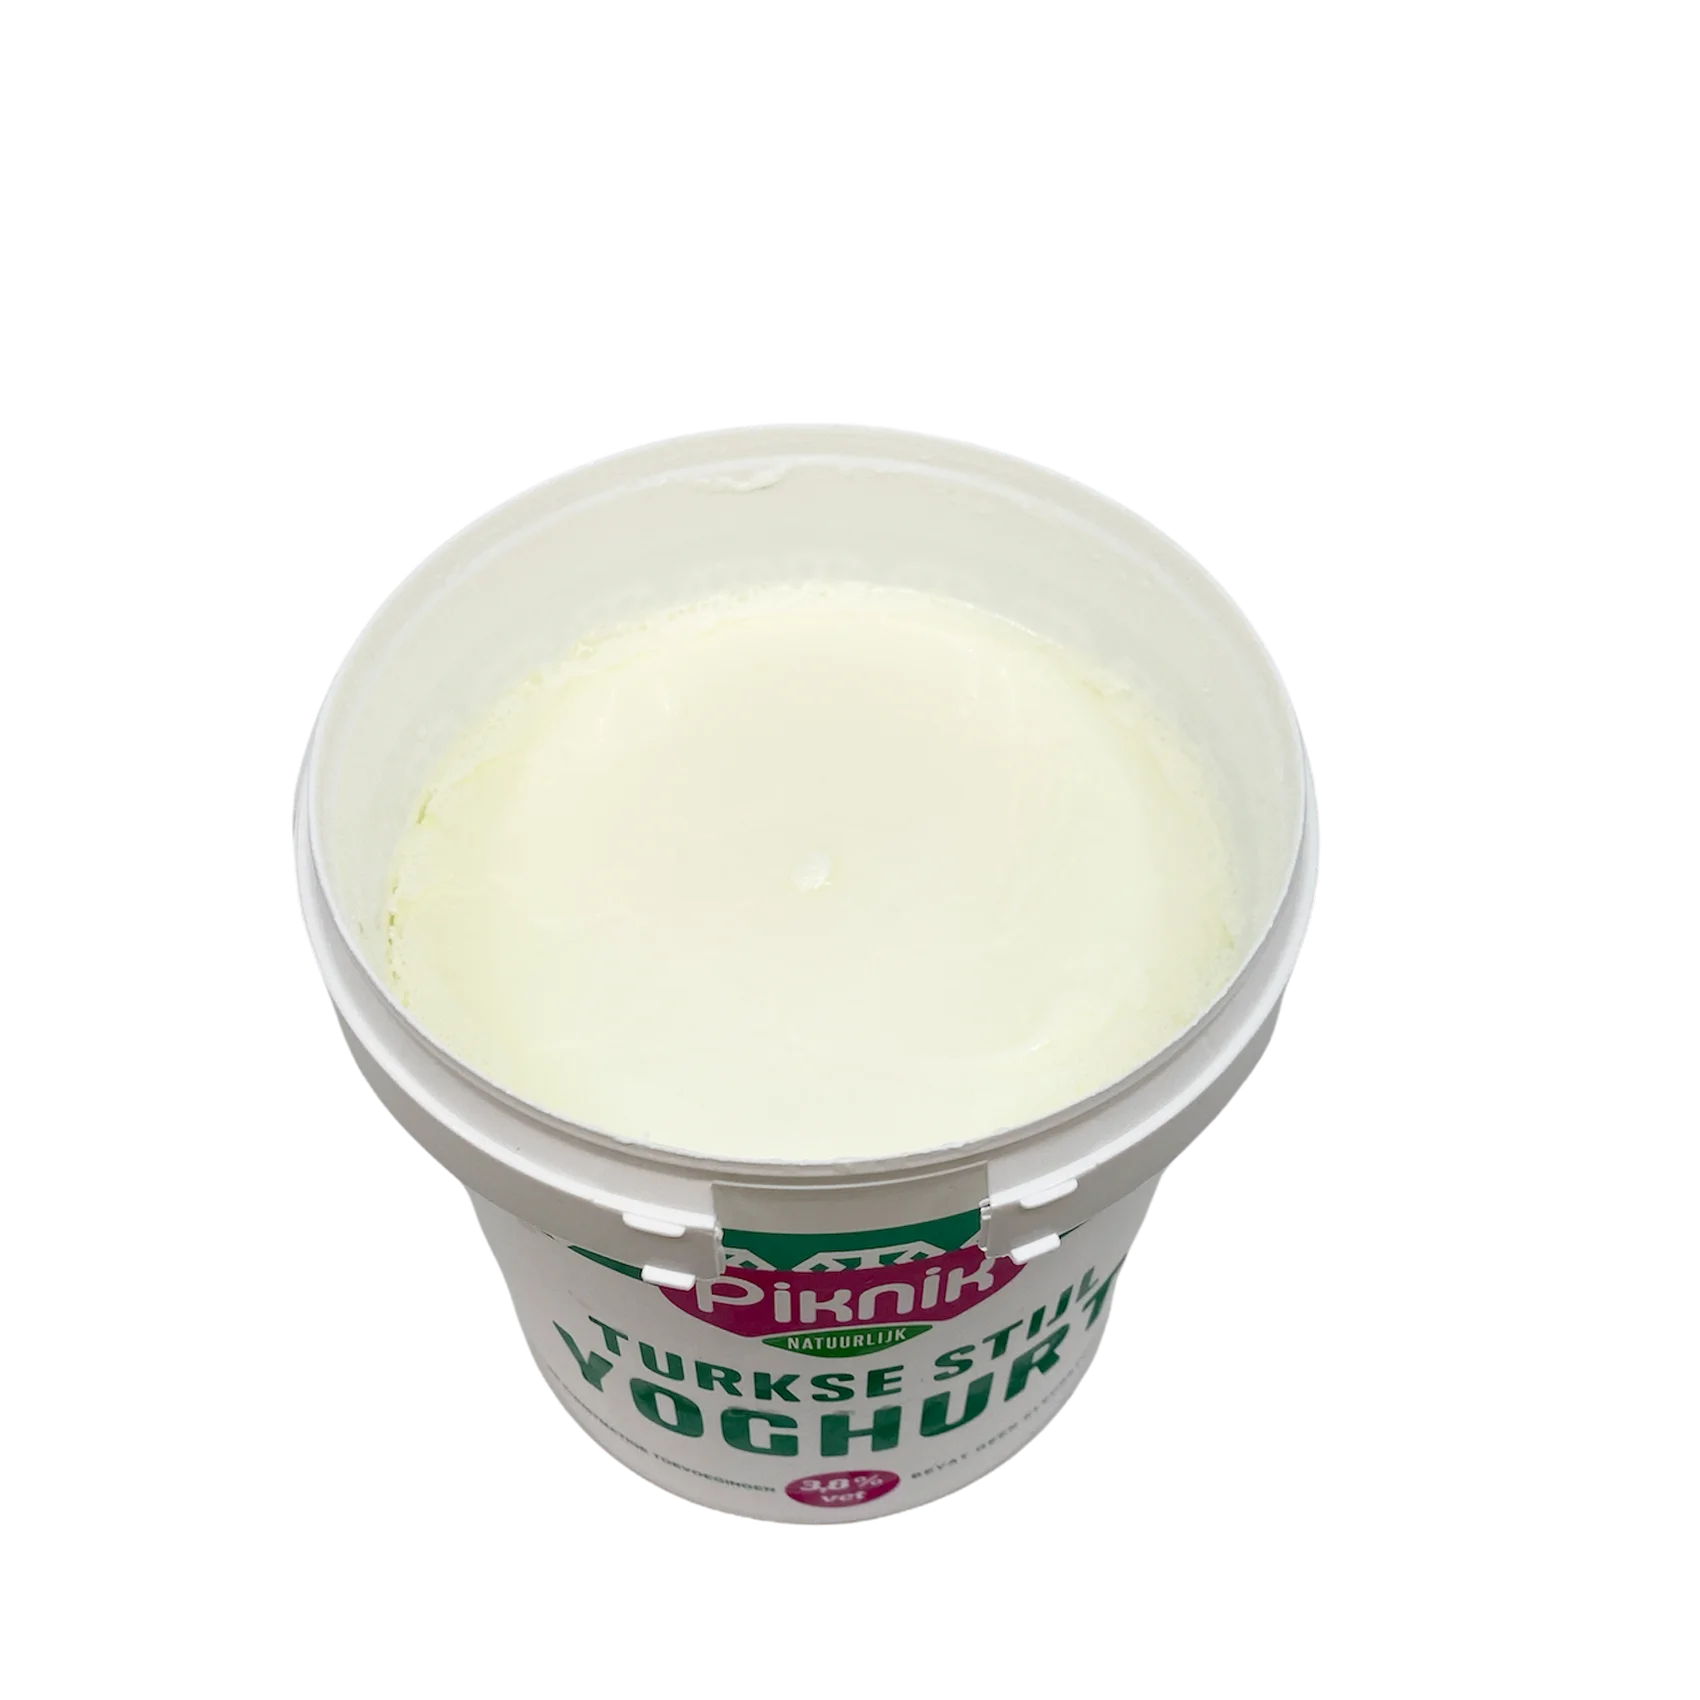 Premium Quality Halal  3.8% / 10% Fat Turkish Style Natural Plain Yogurt 1 kg 2 kg  From Netherlands For Sale